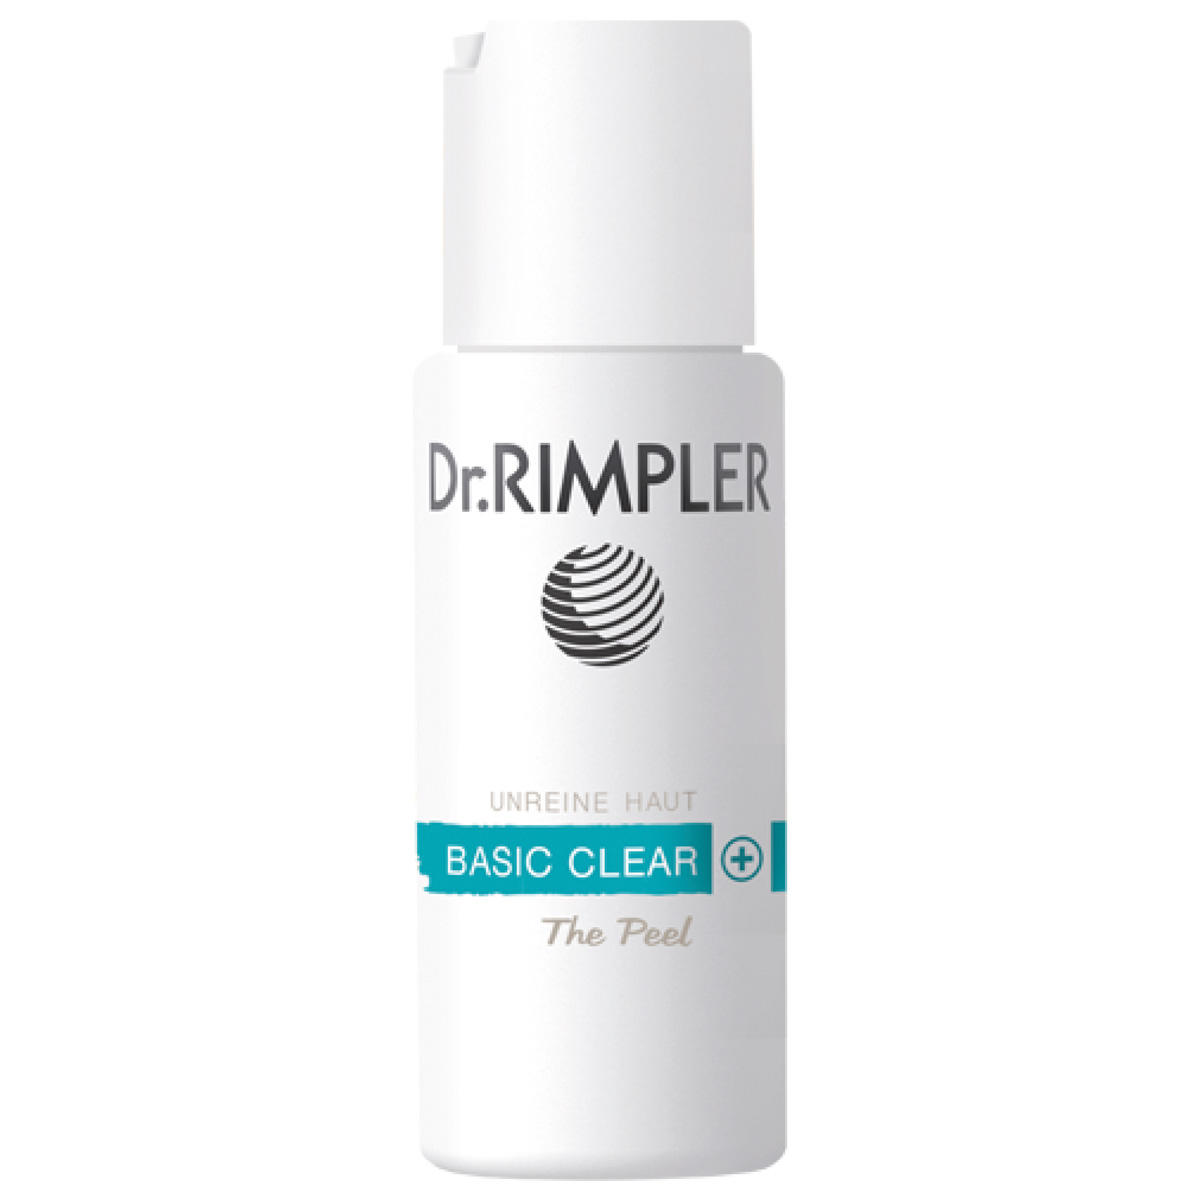 Dr. RIMPLER BASIC CLEAR+ The Peel 15 g - 1